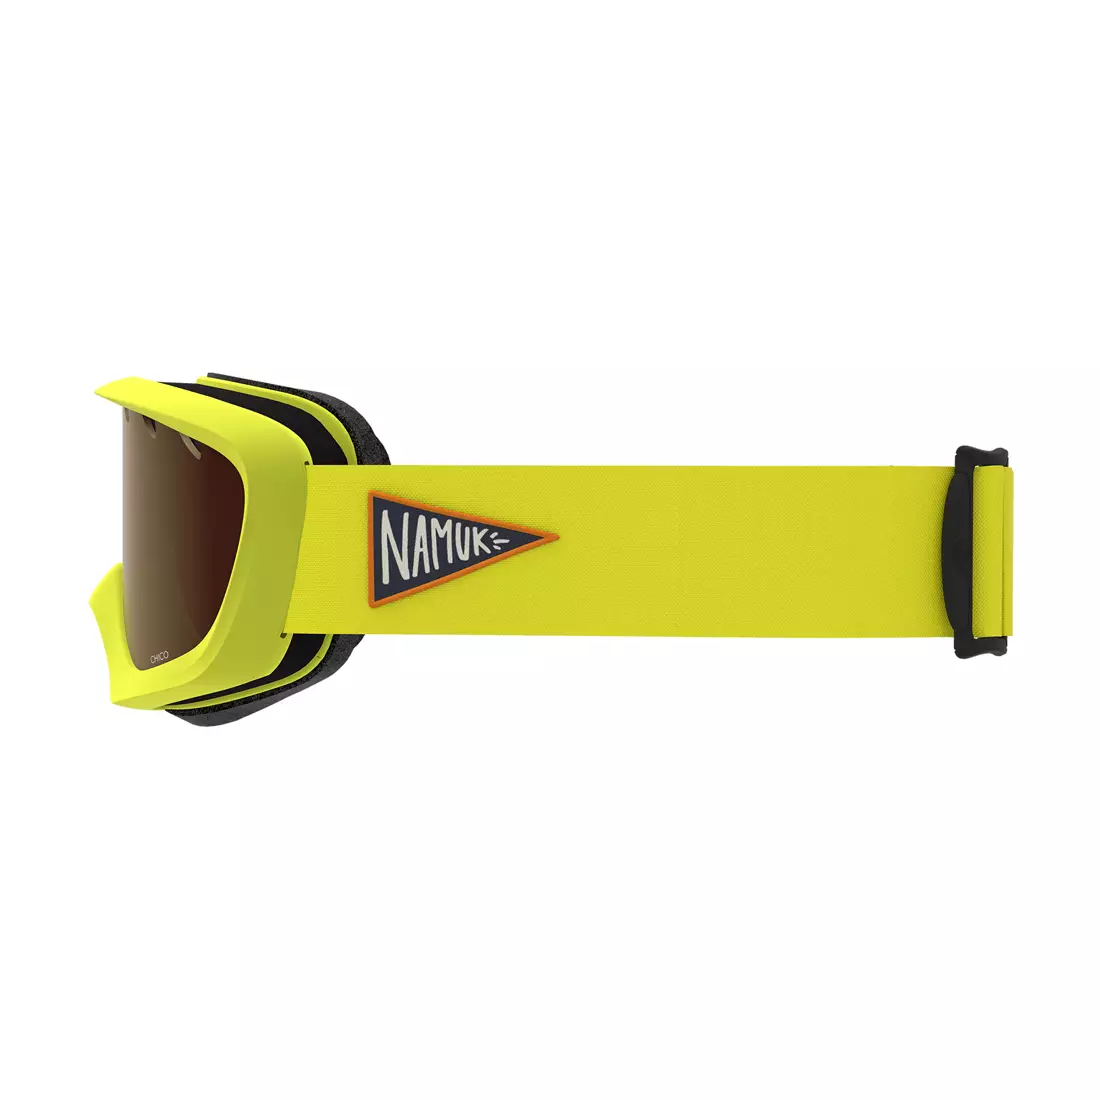 Junior ski / snowboard goggles CHICO NAMUK YELLOW GR-7105420